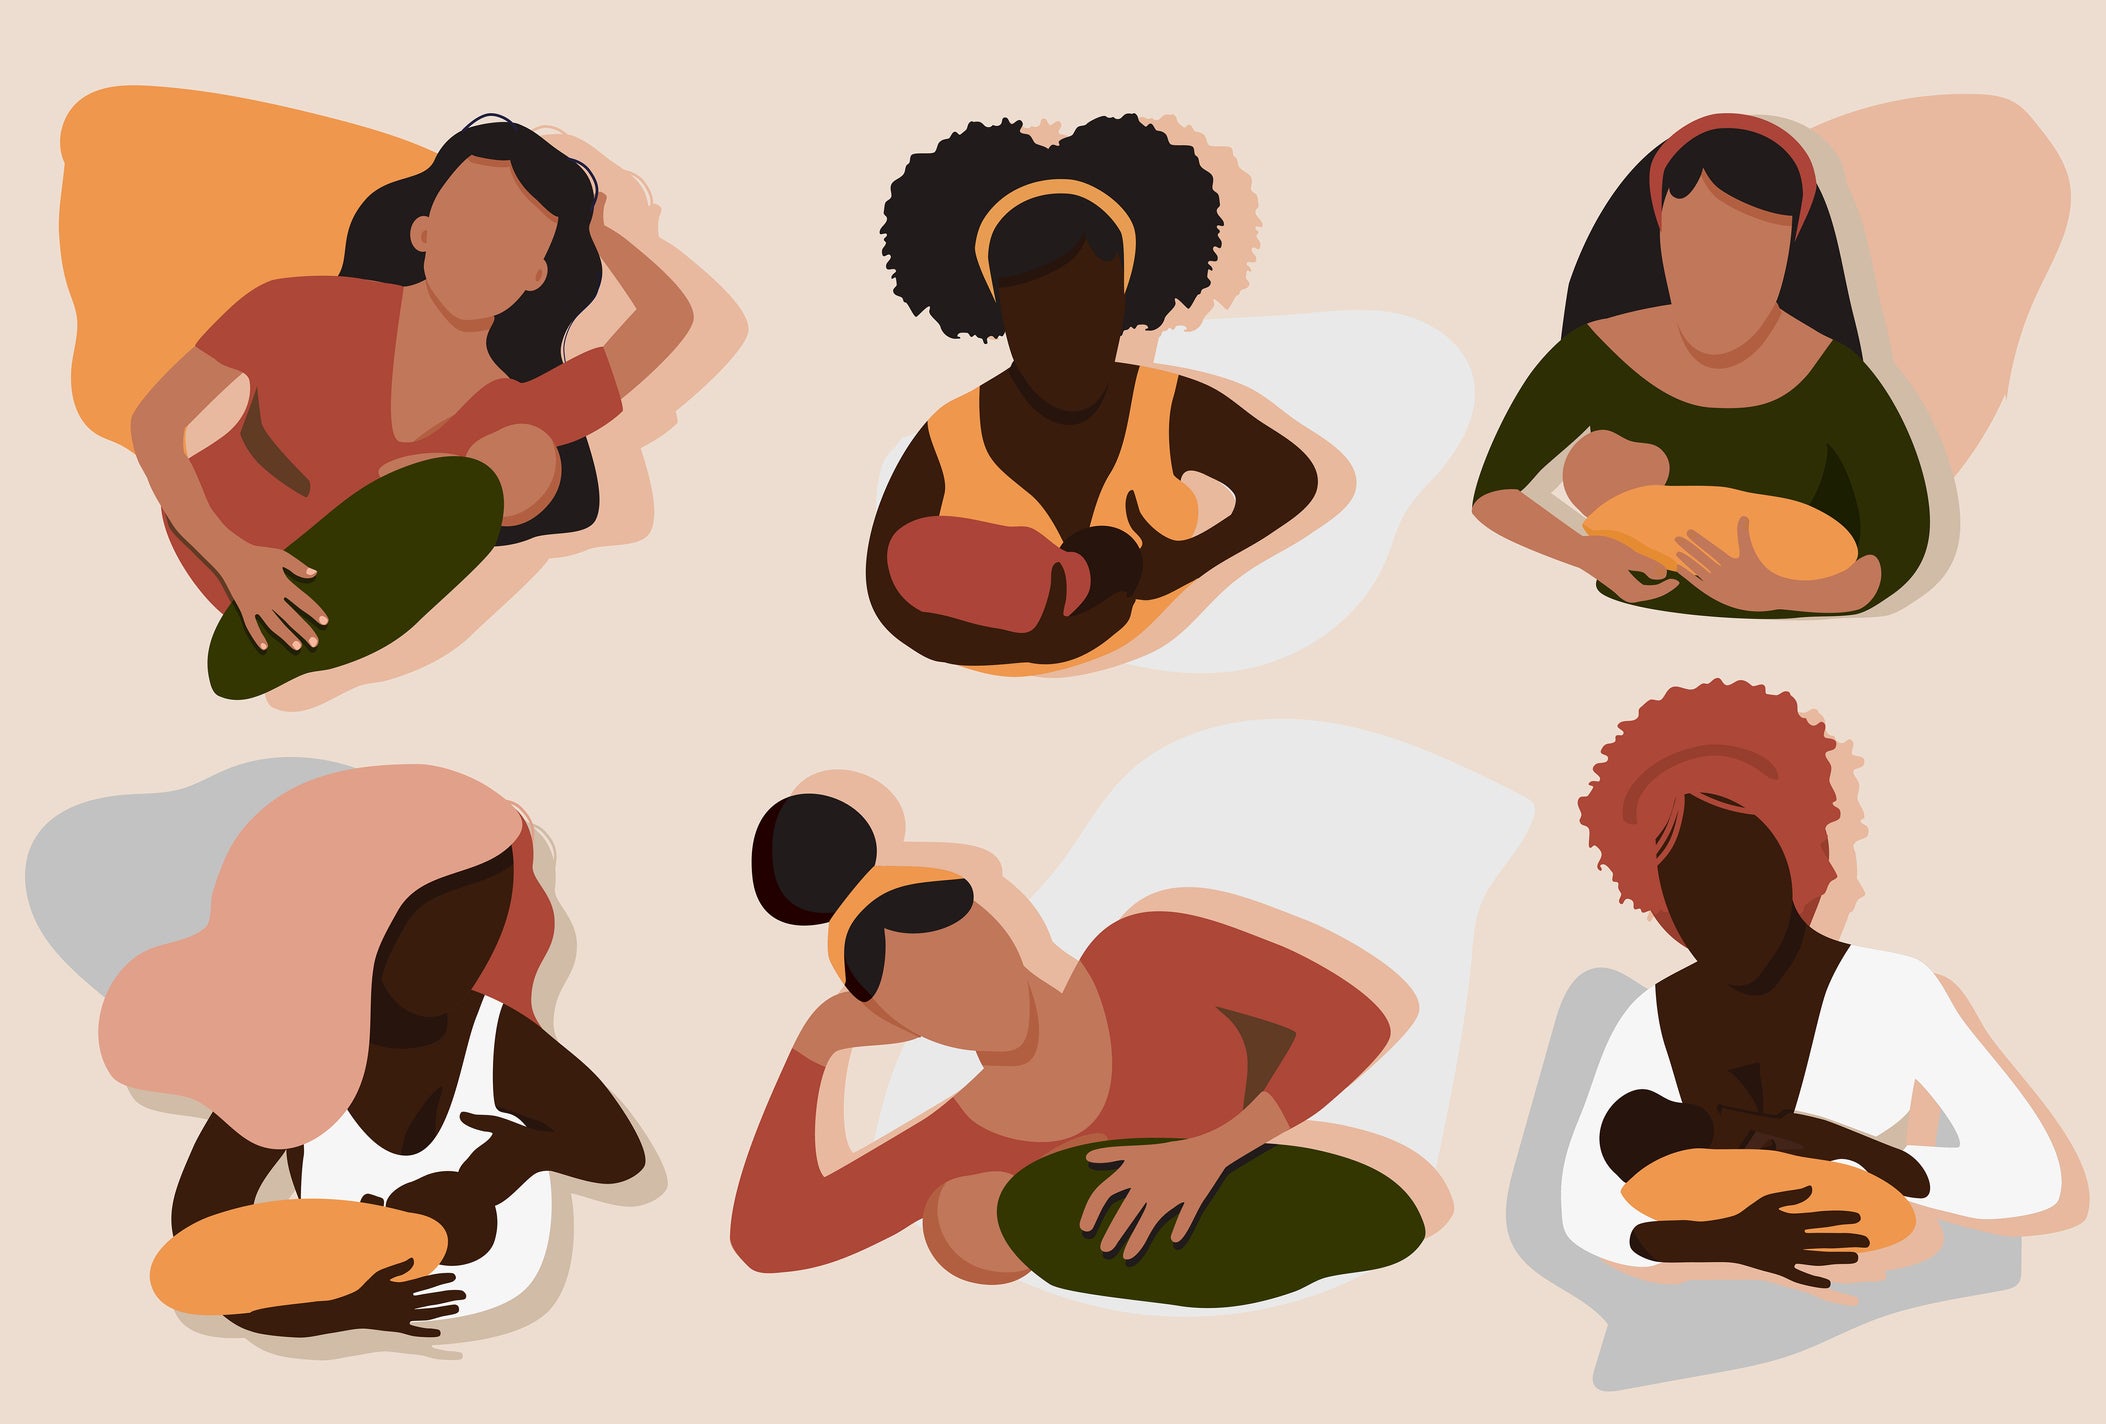 Black Lactation Specialists Debunk 7 Breastfeeding Myths